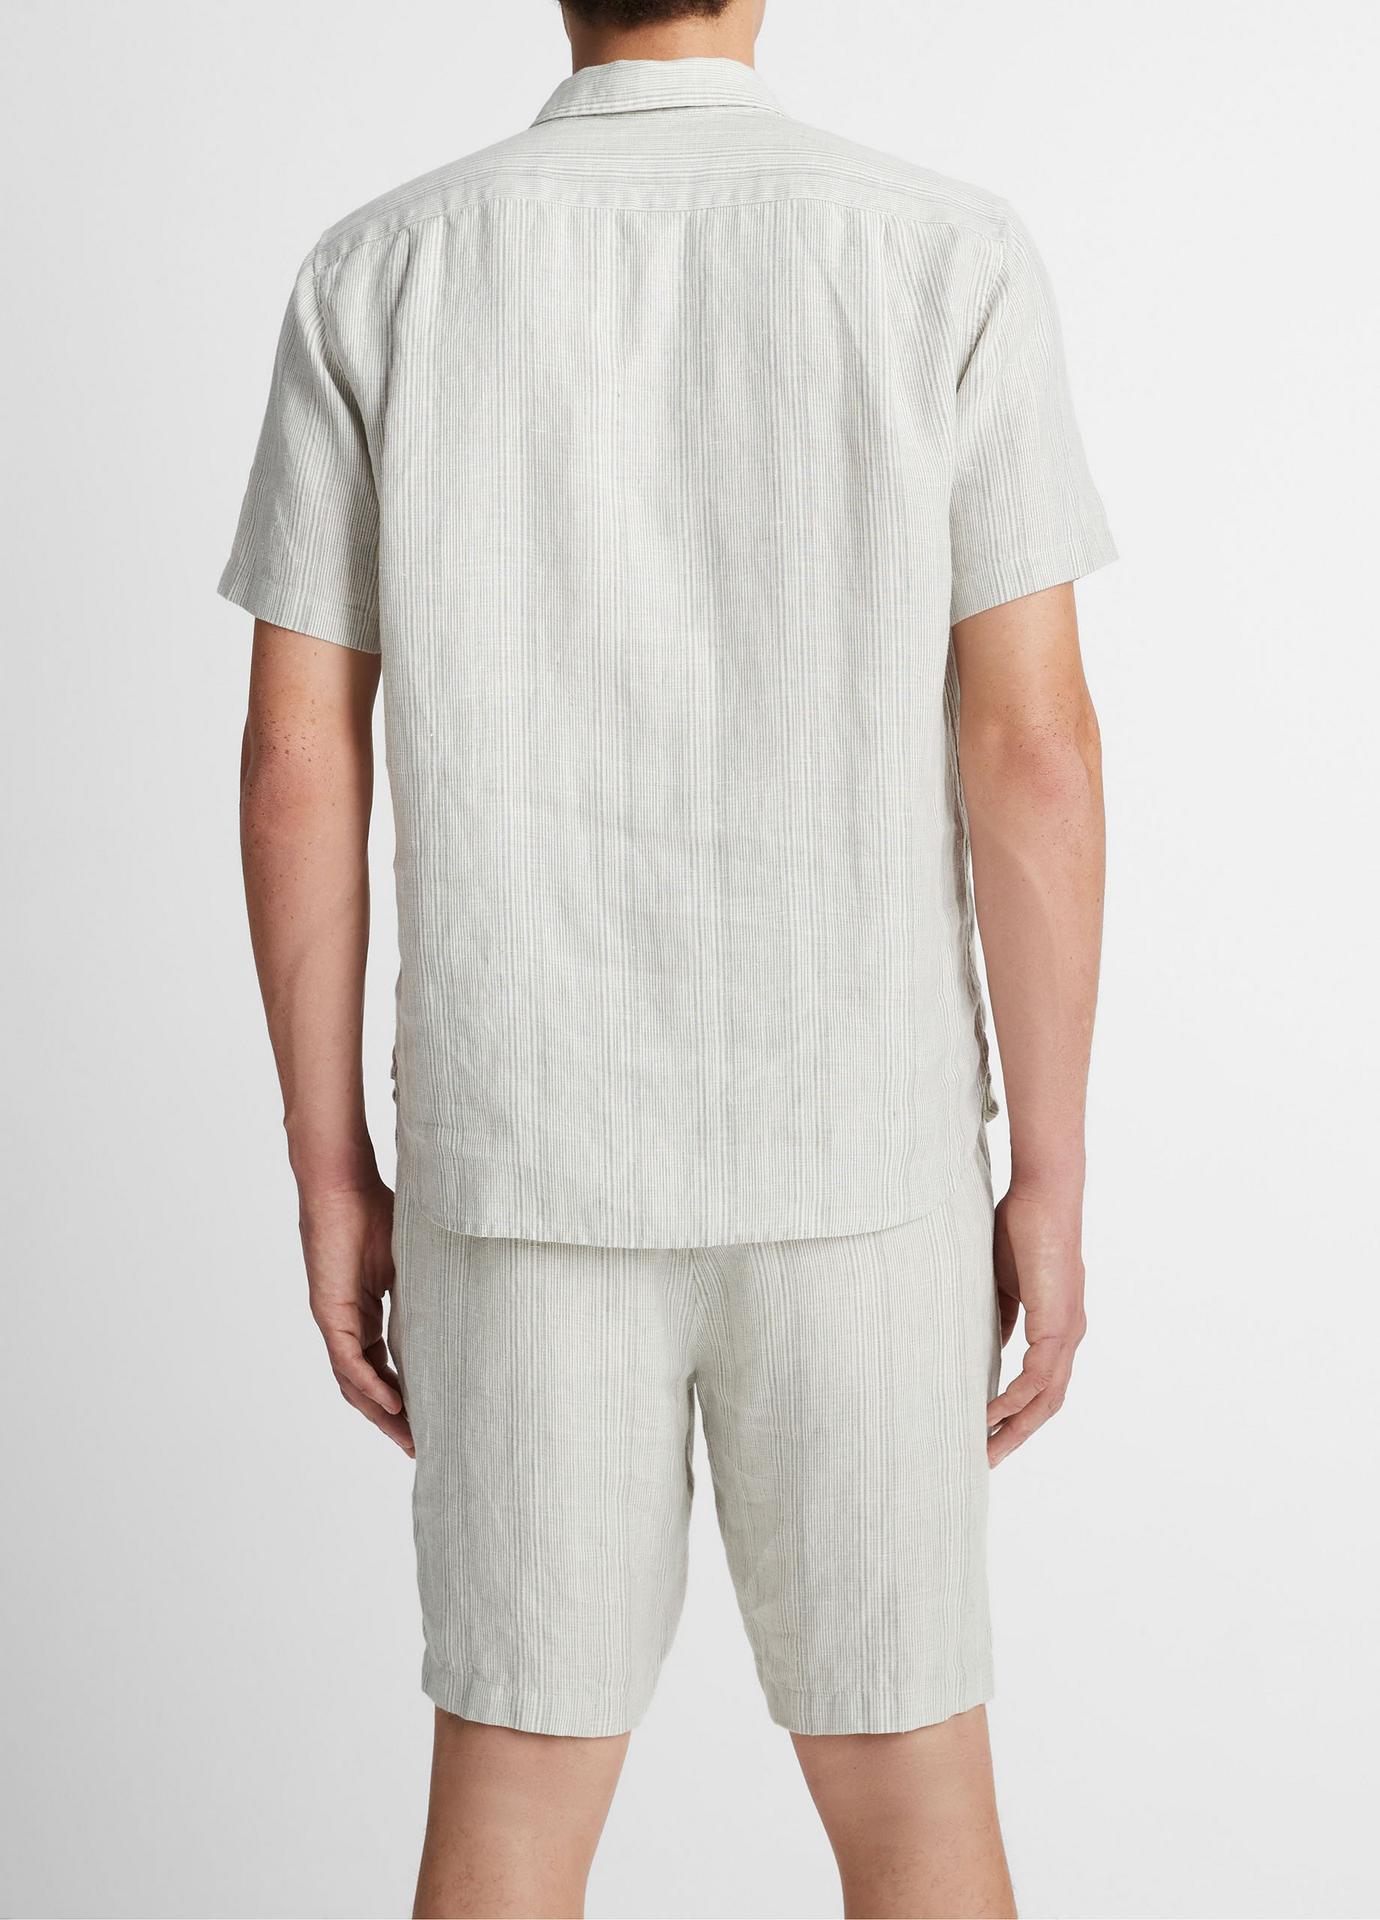 Vince Shadow Stripe Hemp Short-Sleeve Shirt